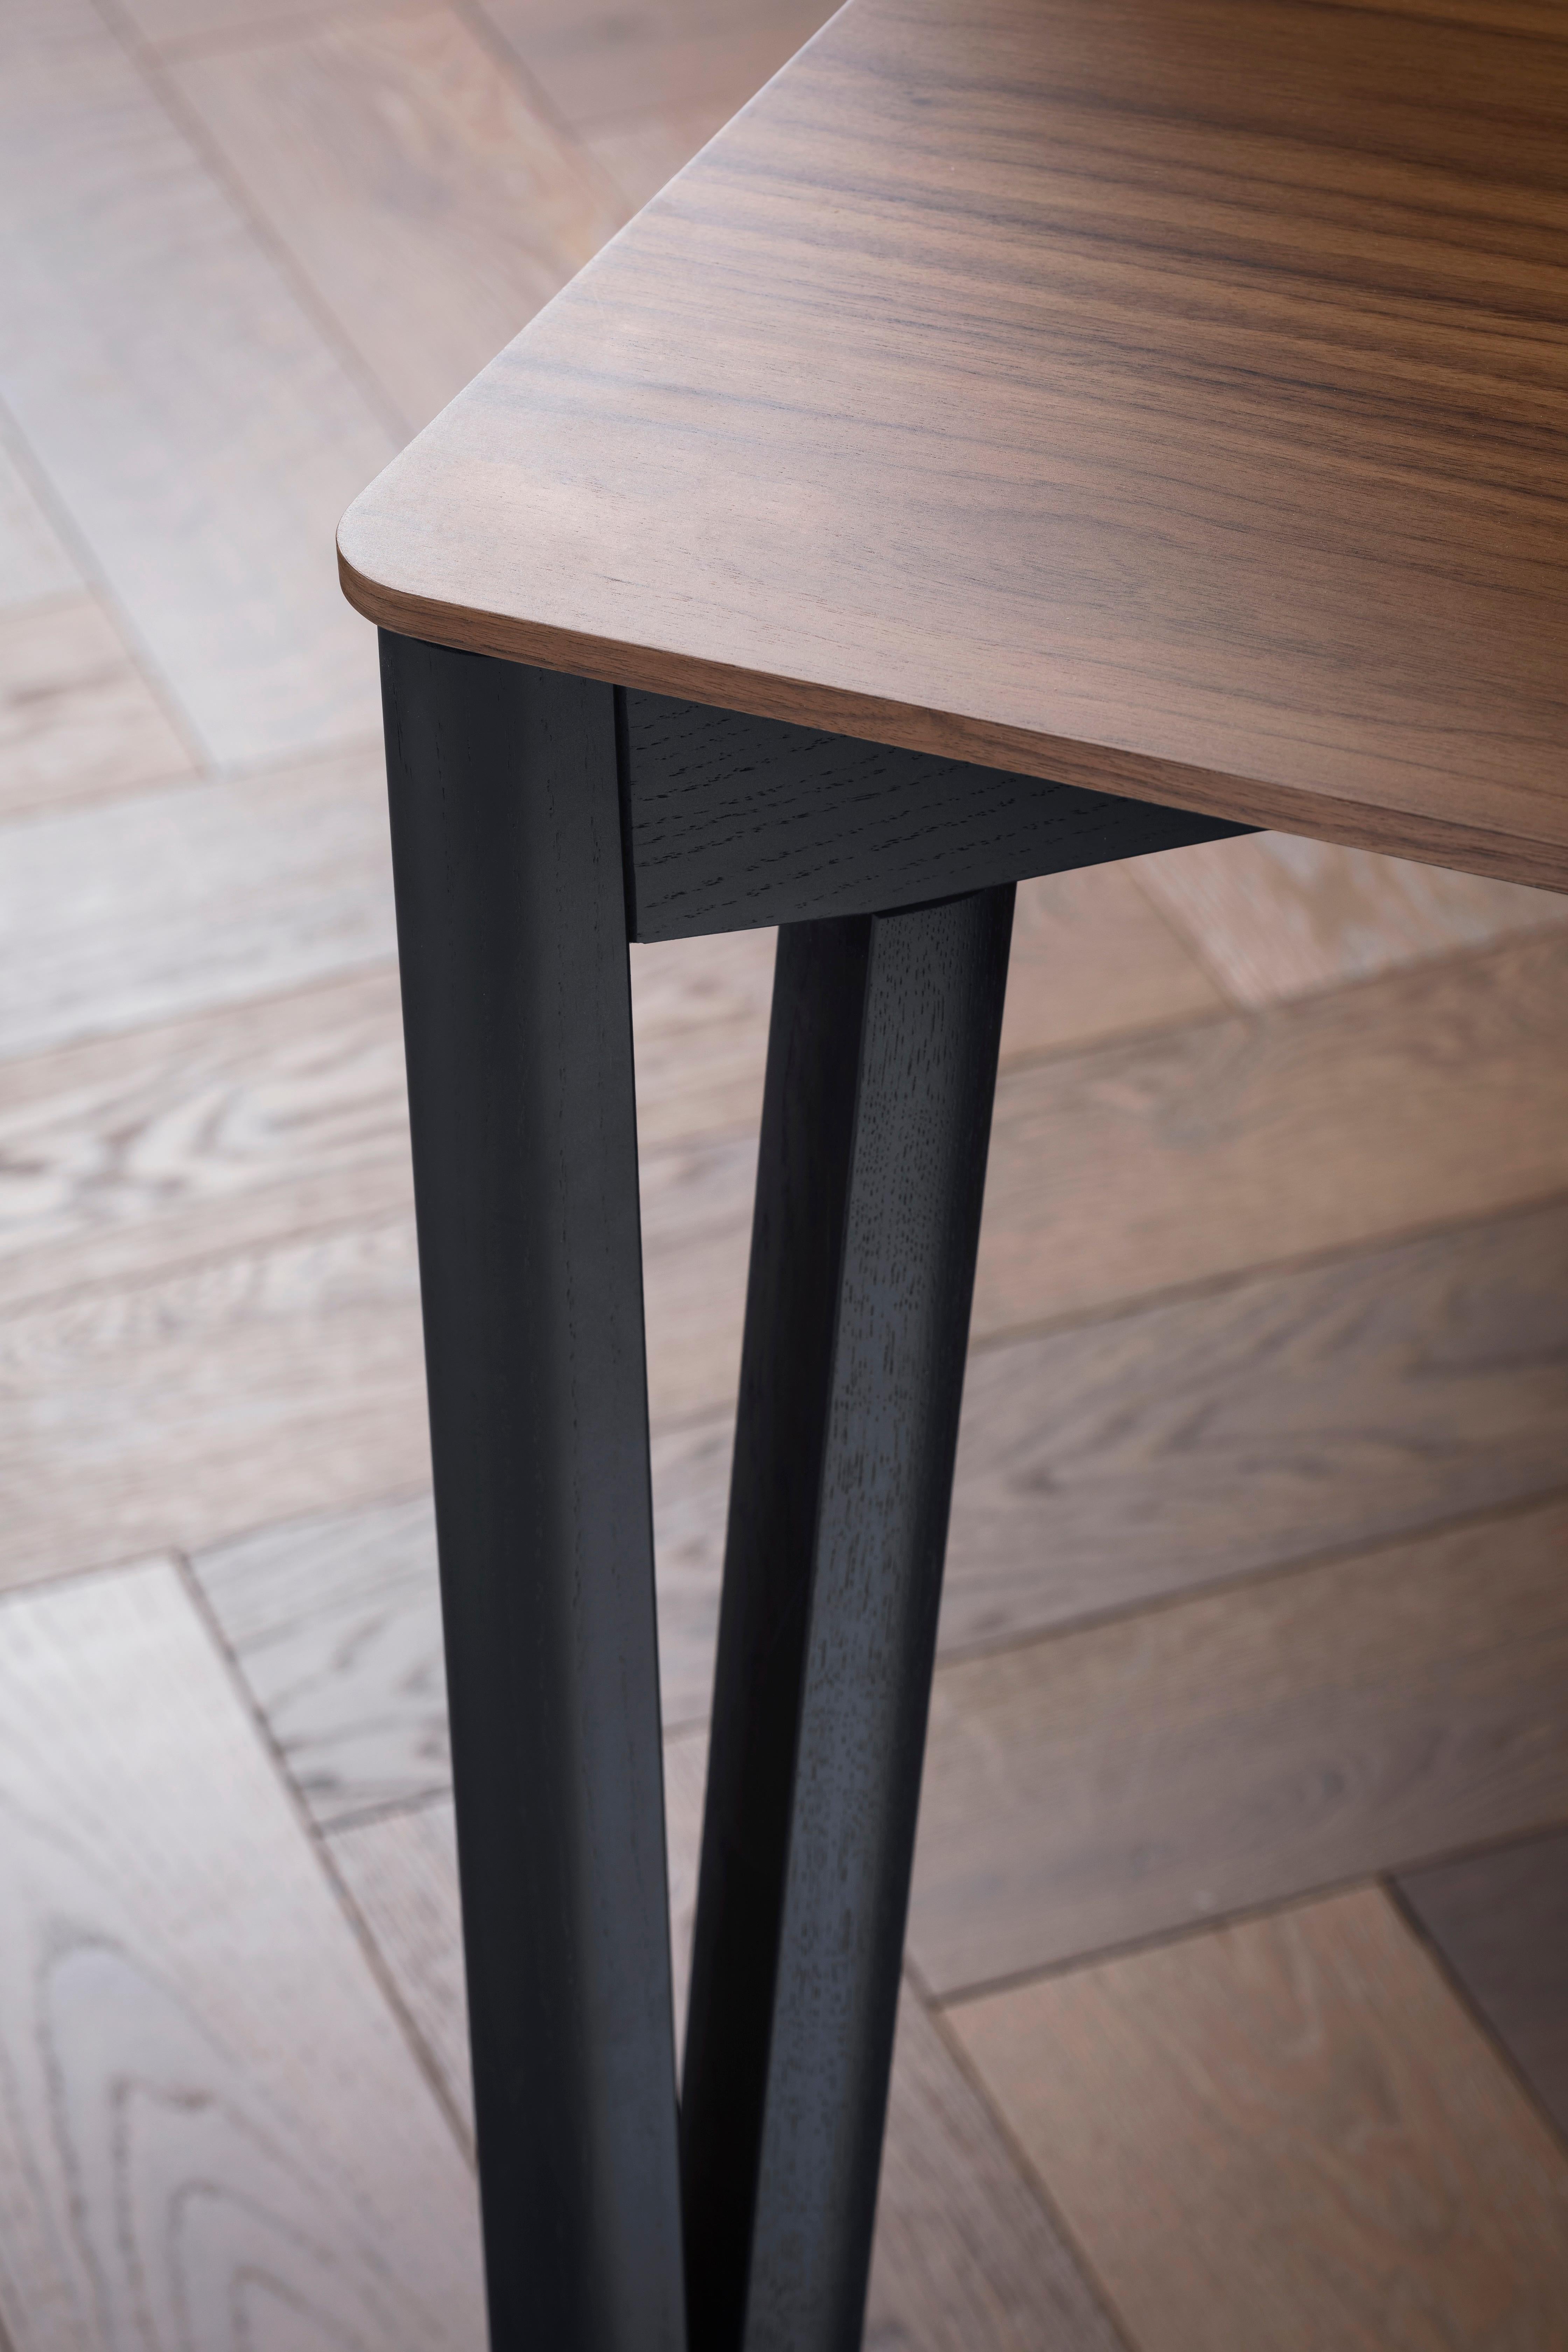 Italian Decapo Extendible Table in Black Aniline Base, by Francesco Beghetto For Sale